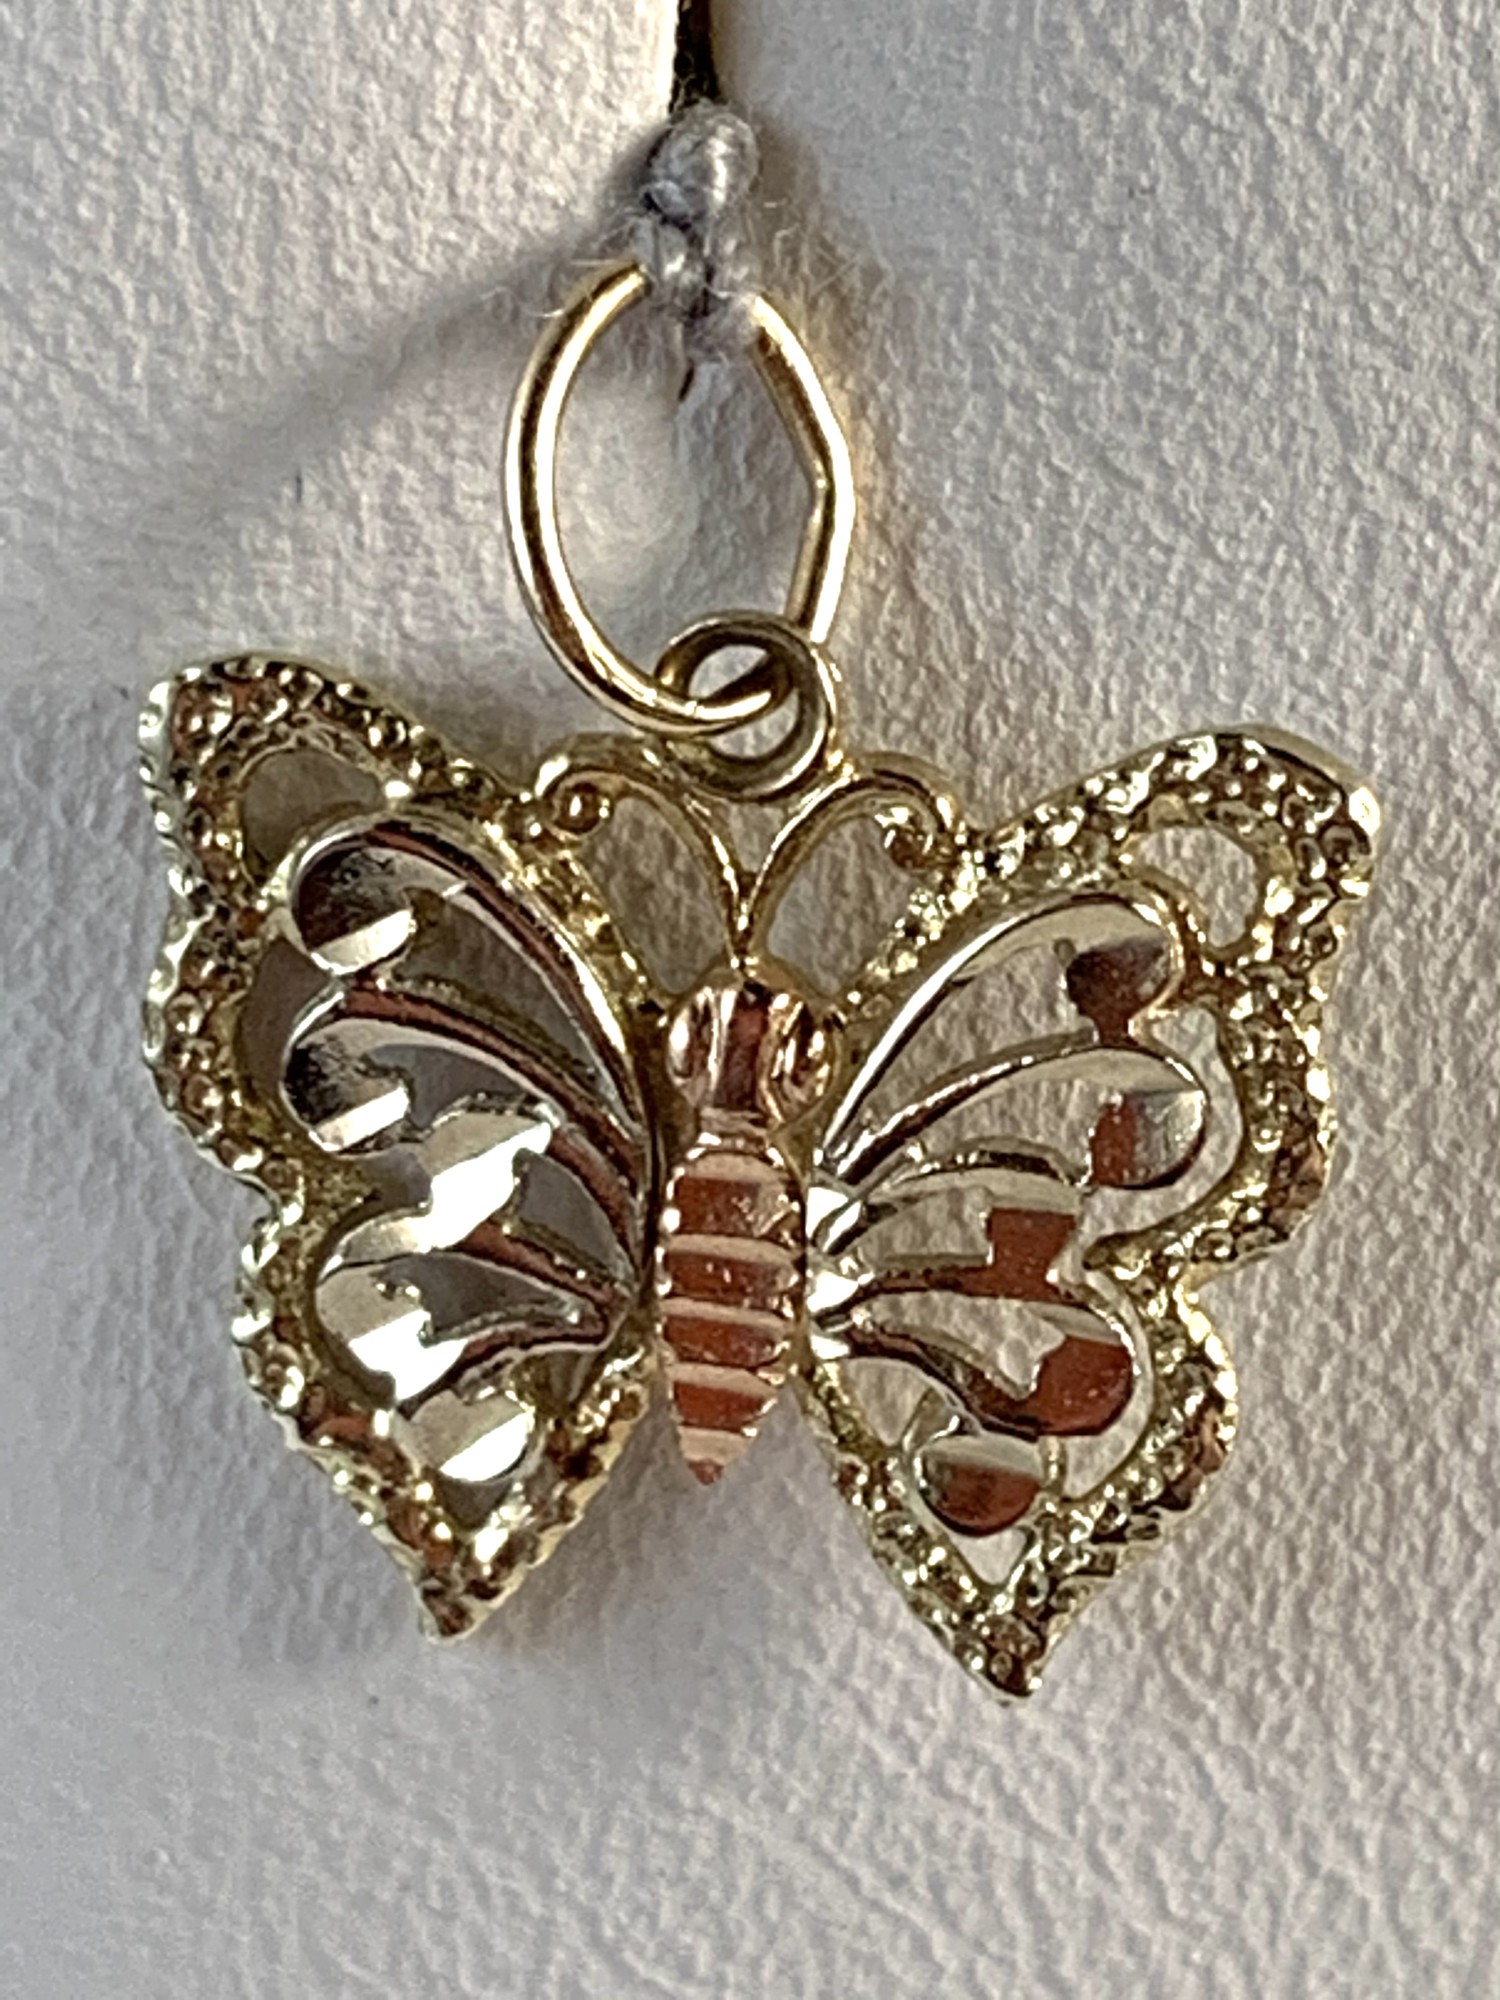 Butterfly Charm
Tri Color 14 Karat Gold
Diamond Cut